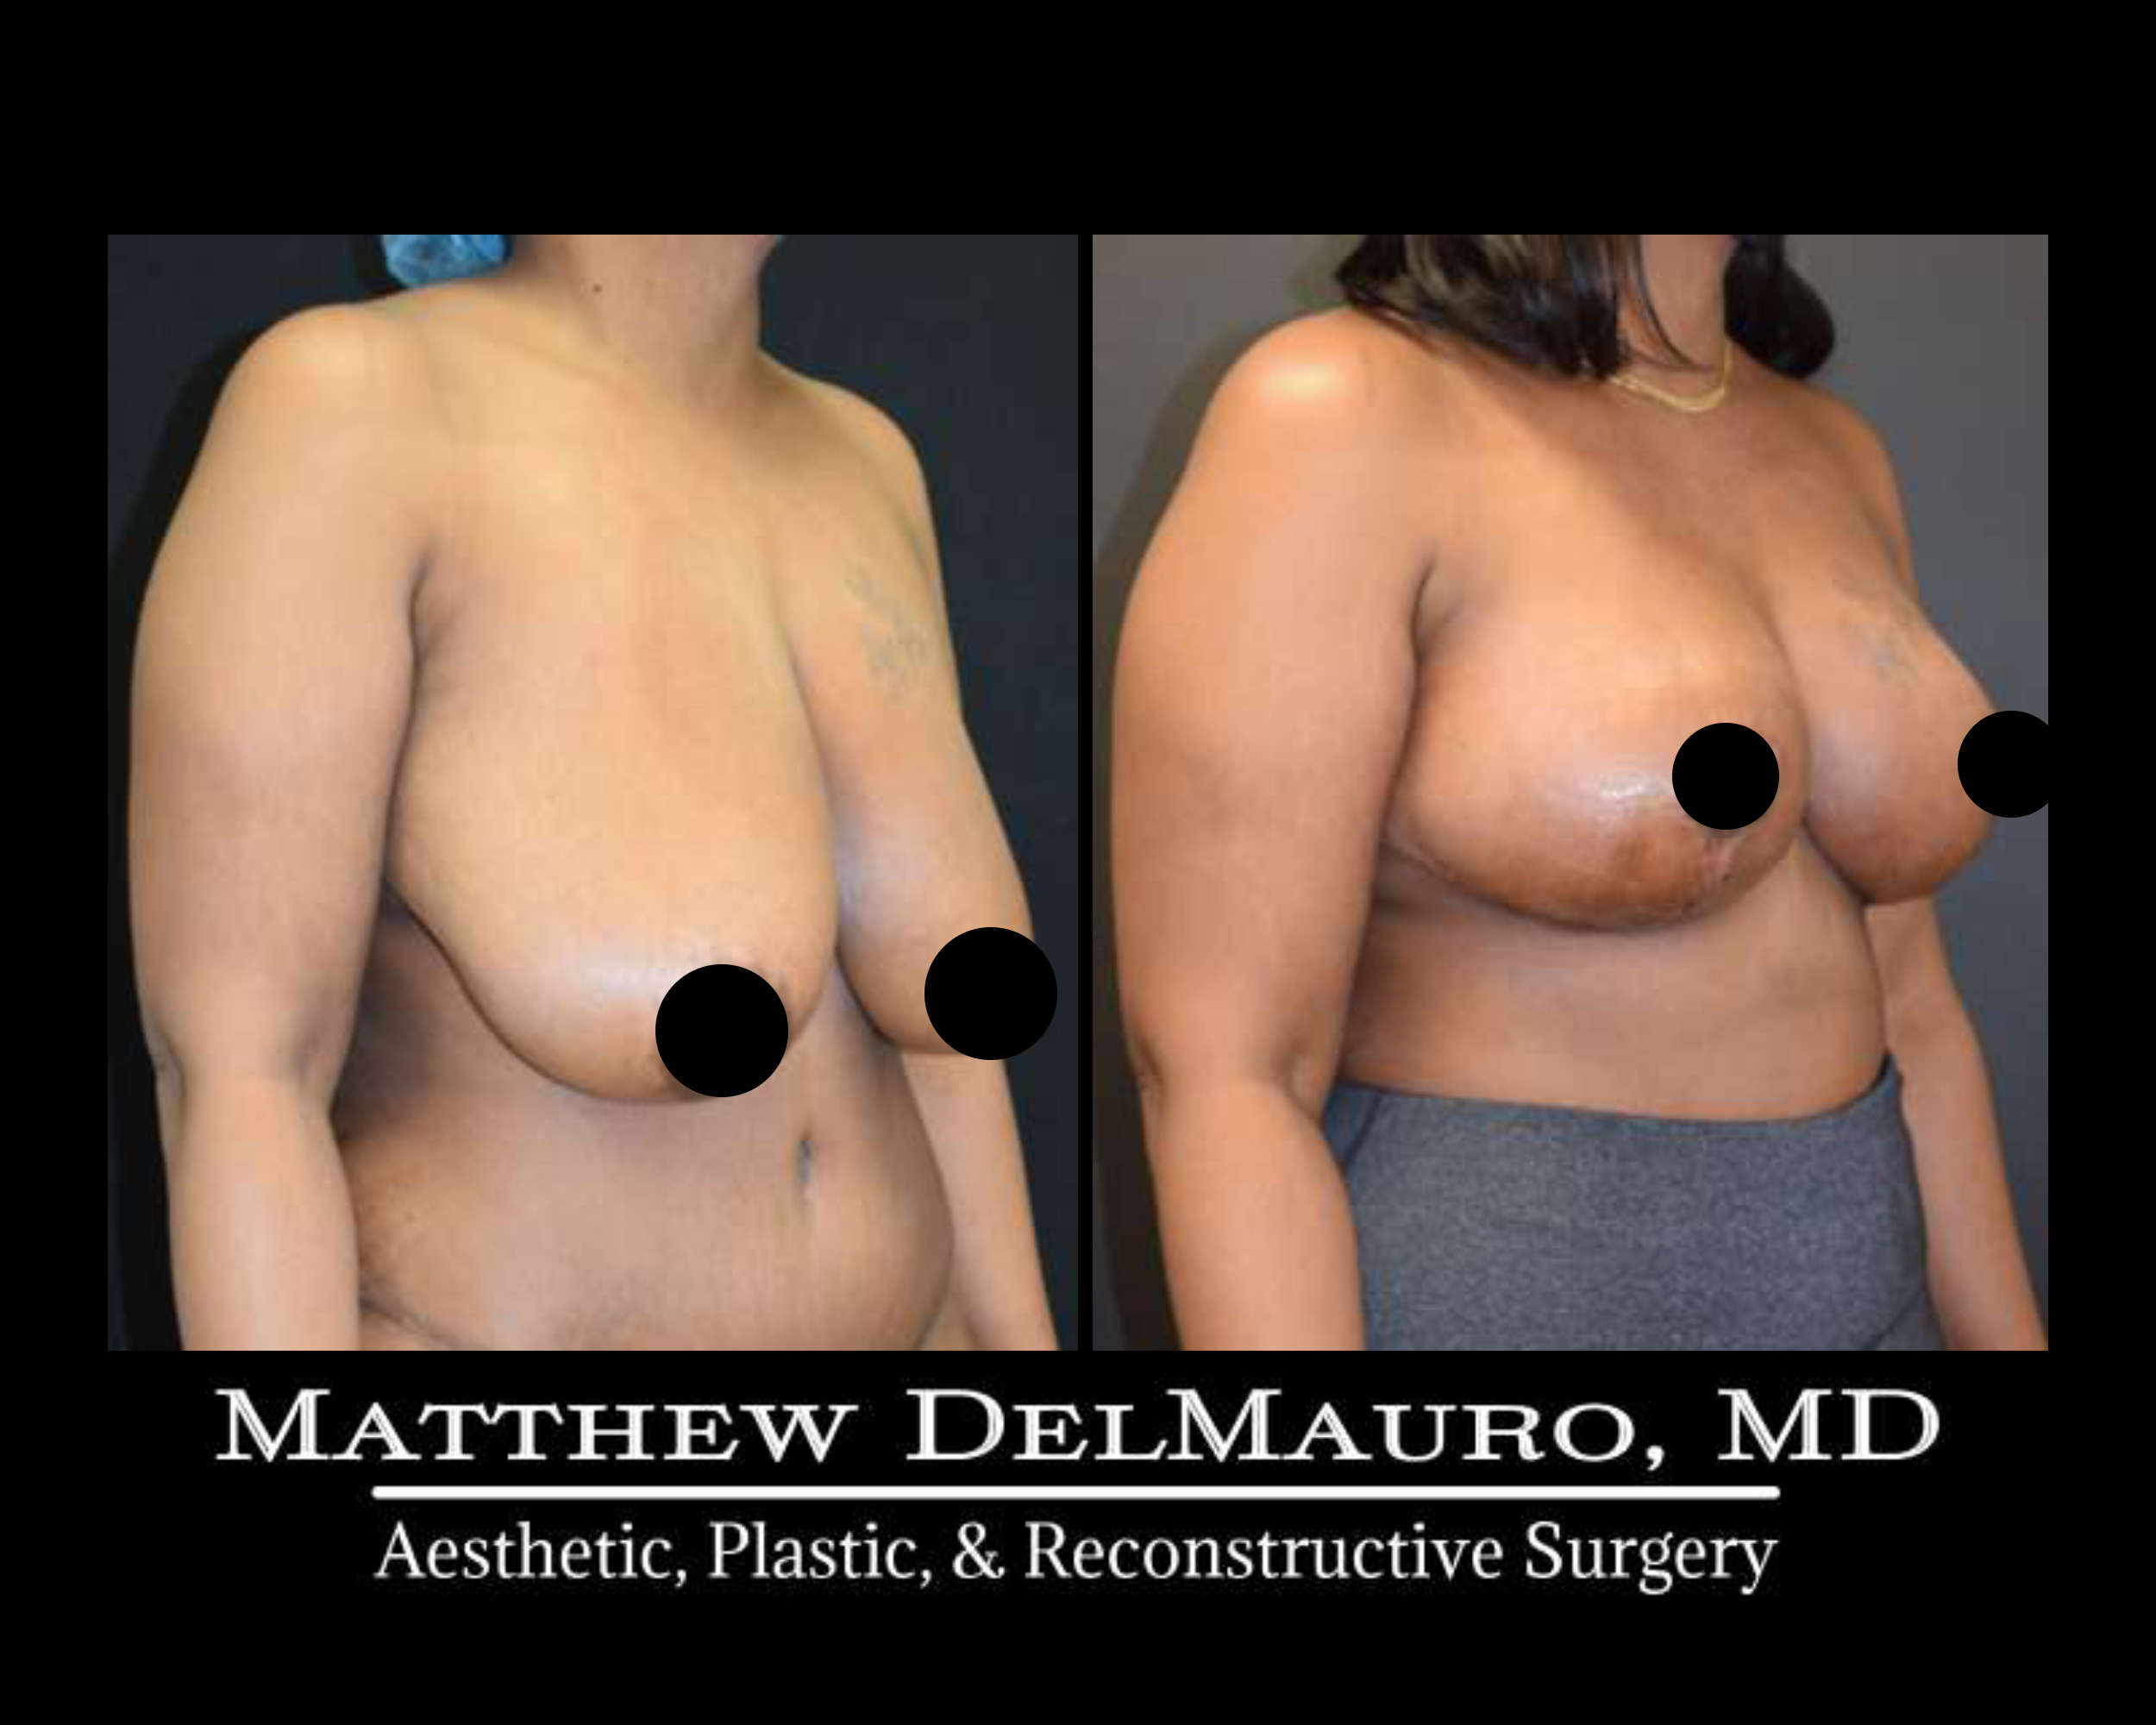 Breast Reduction Patient 1